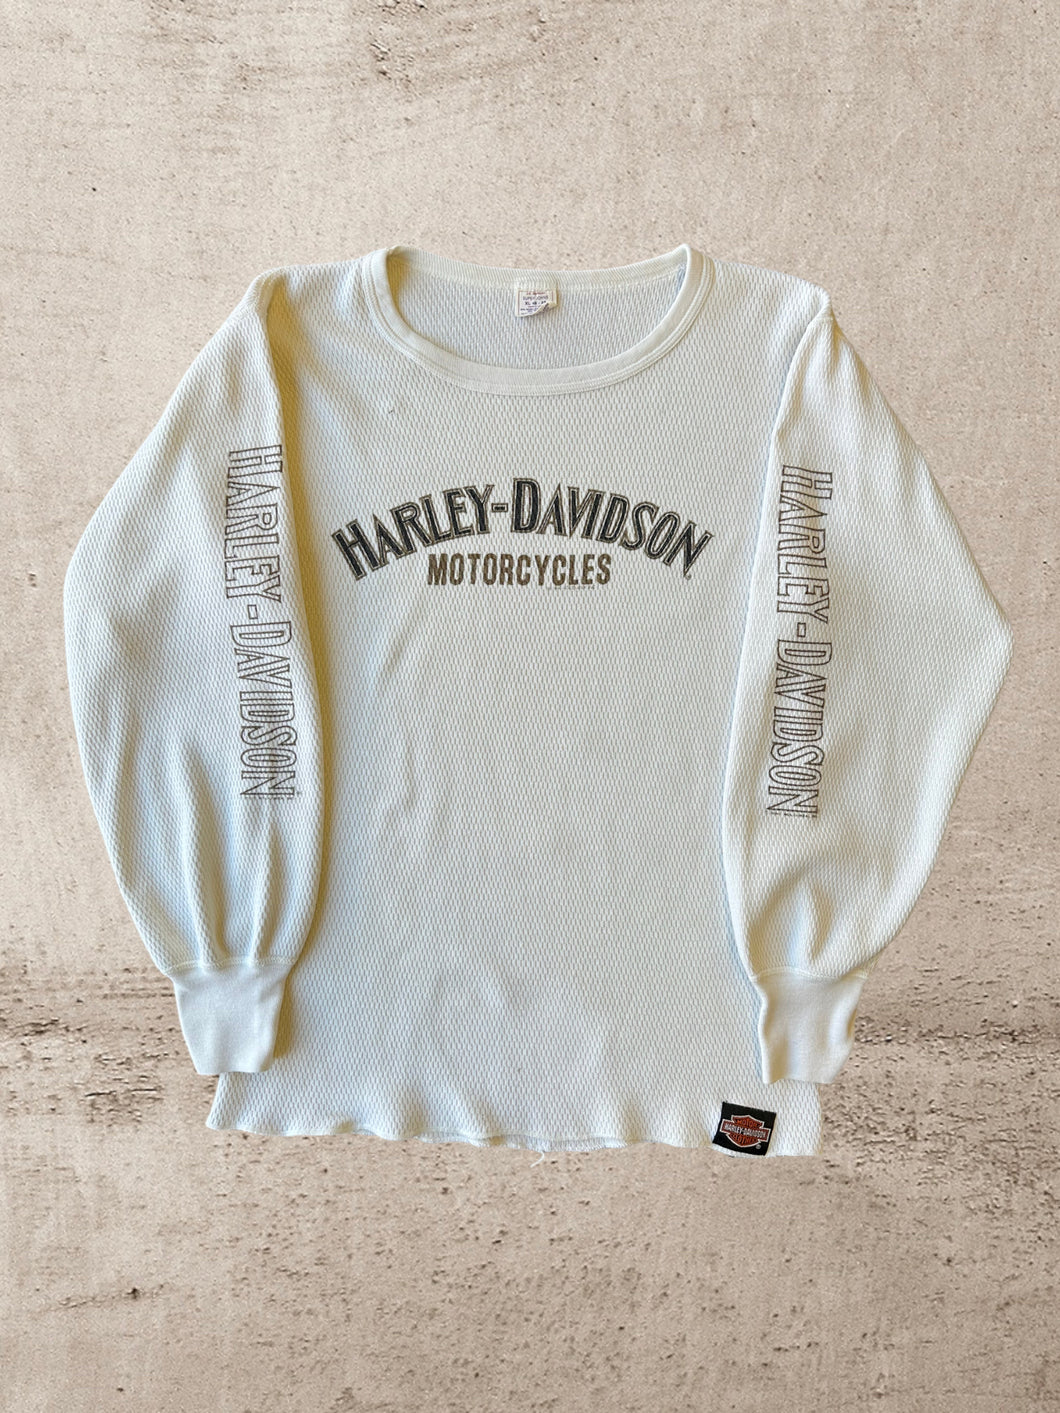 80s Harley Davidson Waffle Thermal Shirt - Large